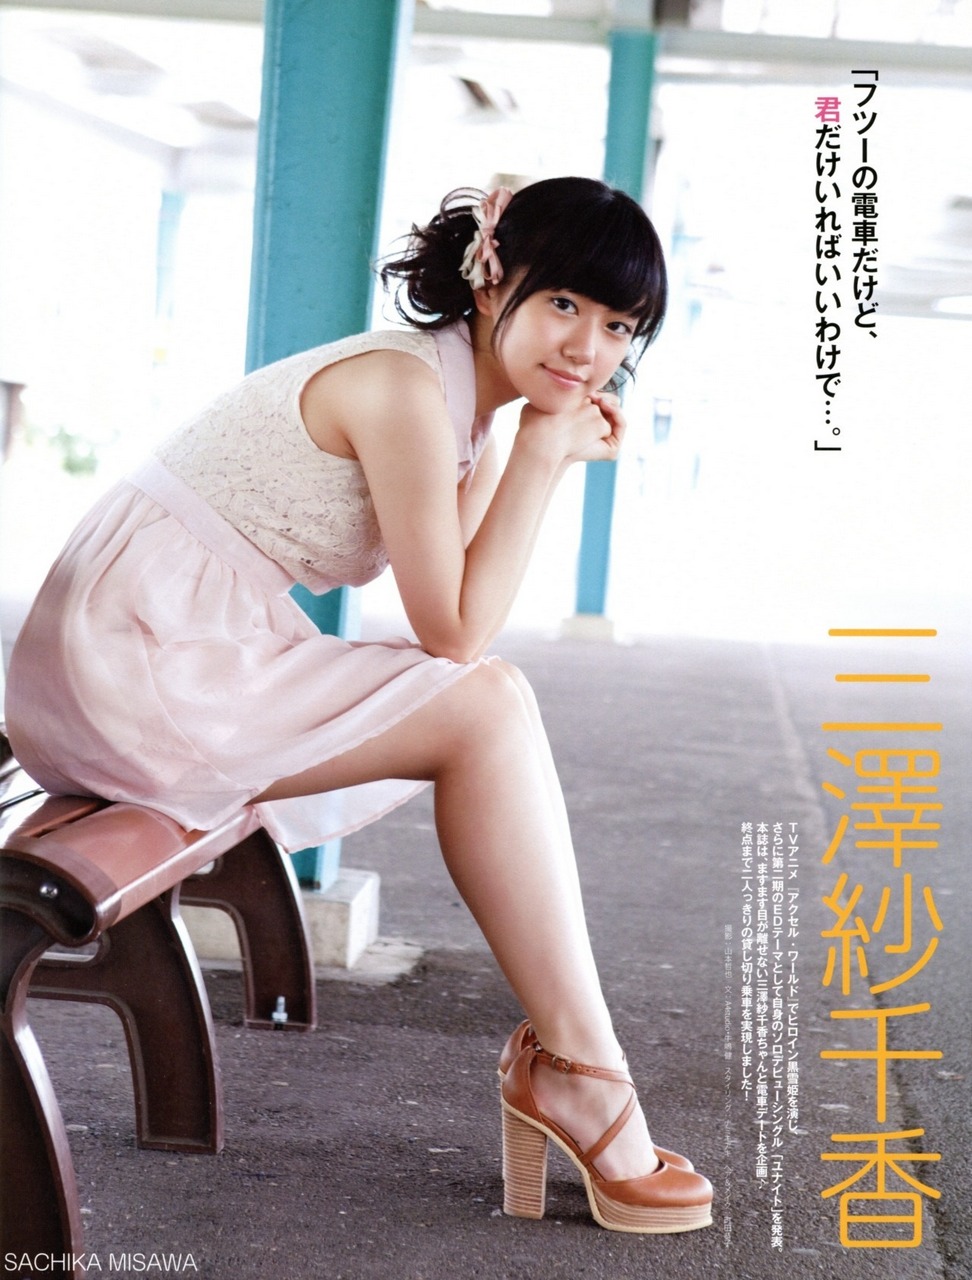 Sachika Misawa Feet